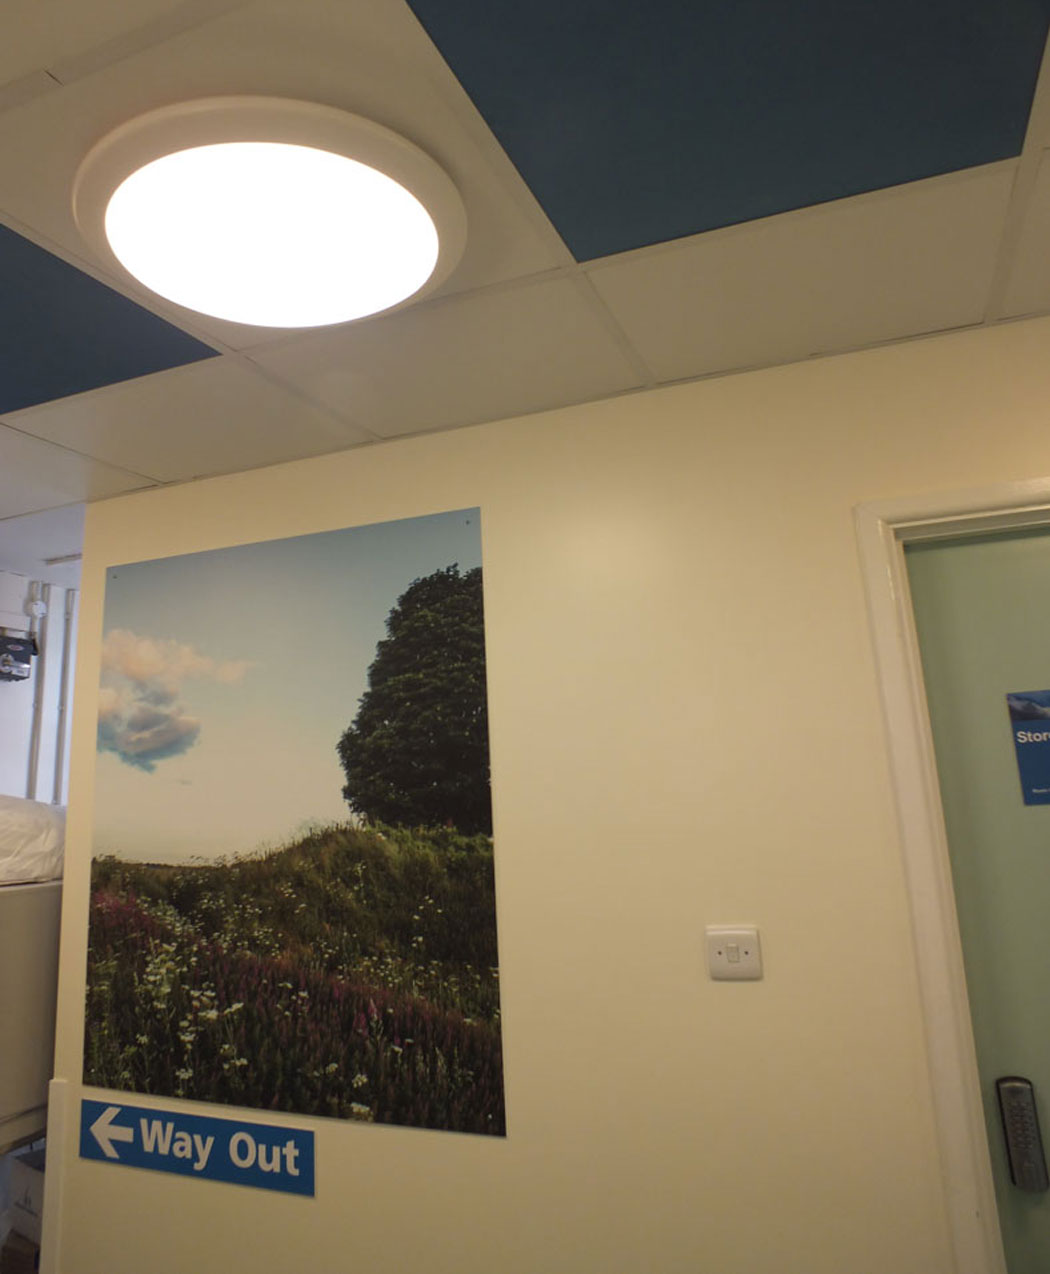 Fertility Centre artworks, Salisbury District Hospital